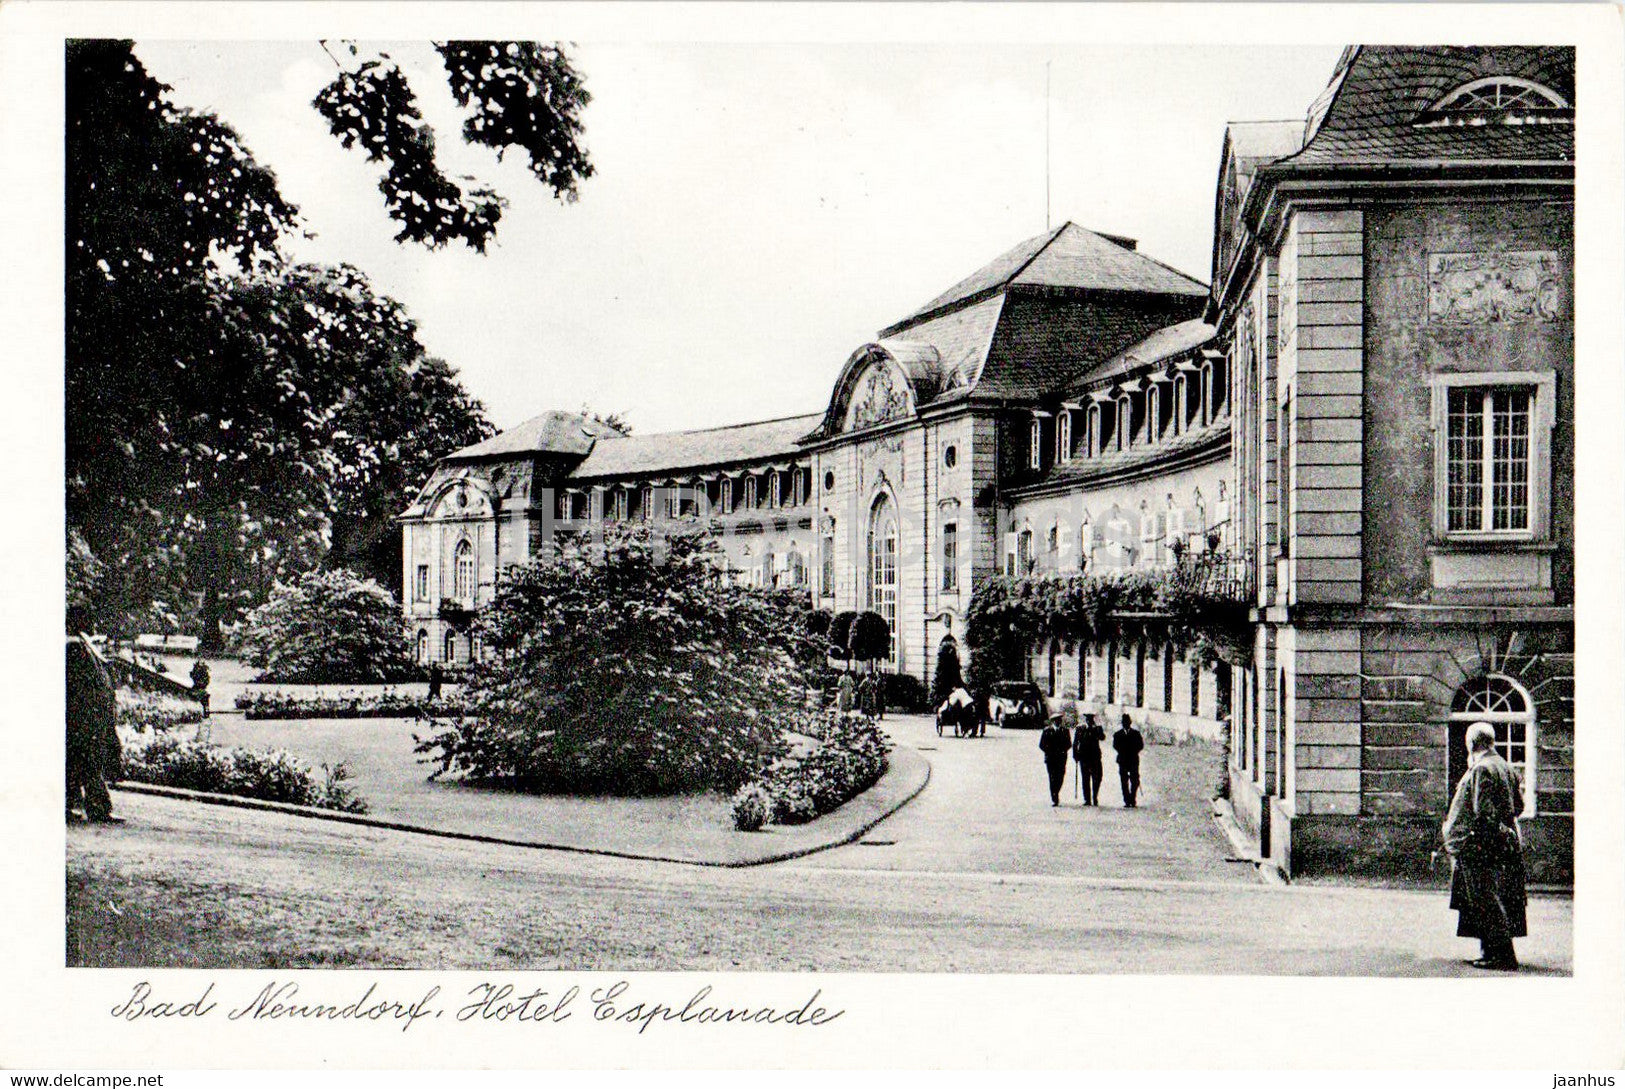 Bad Nenndorf - Hotel Esplanade - old postcard - 1955 - Germany - used - JH Postcards